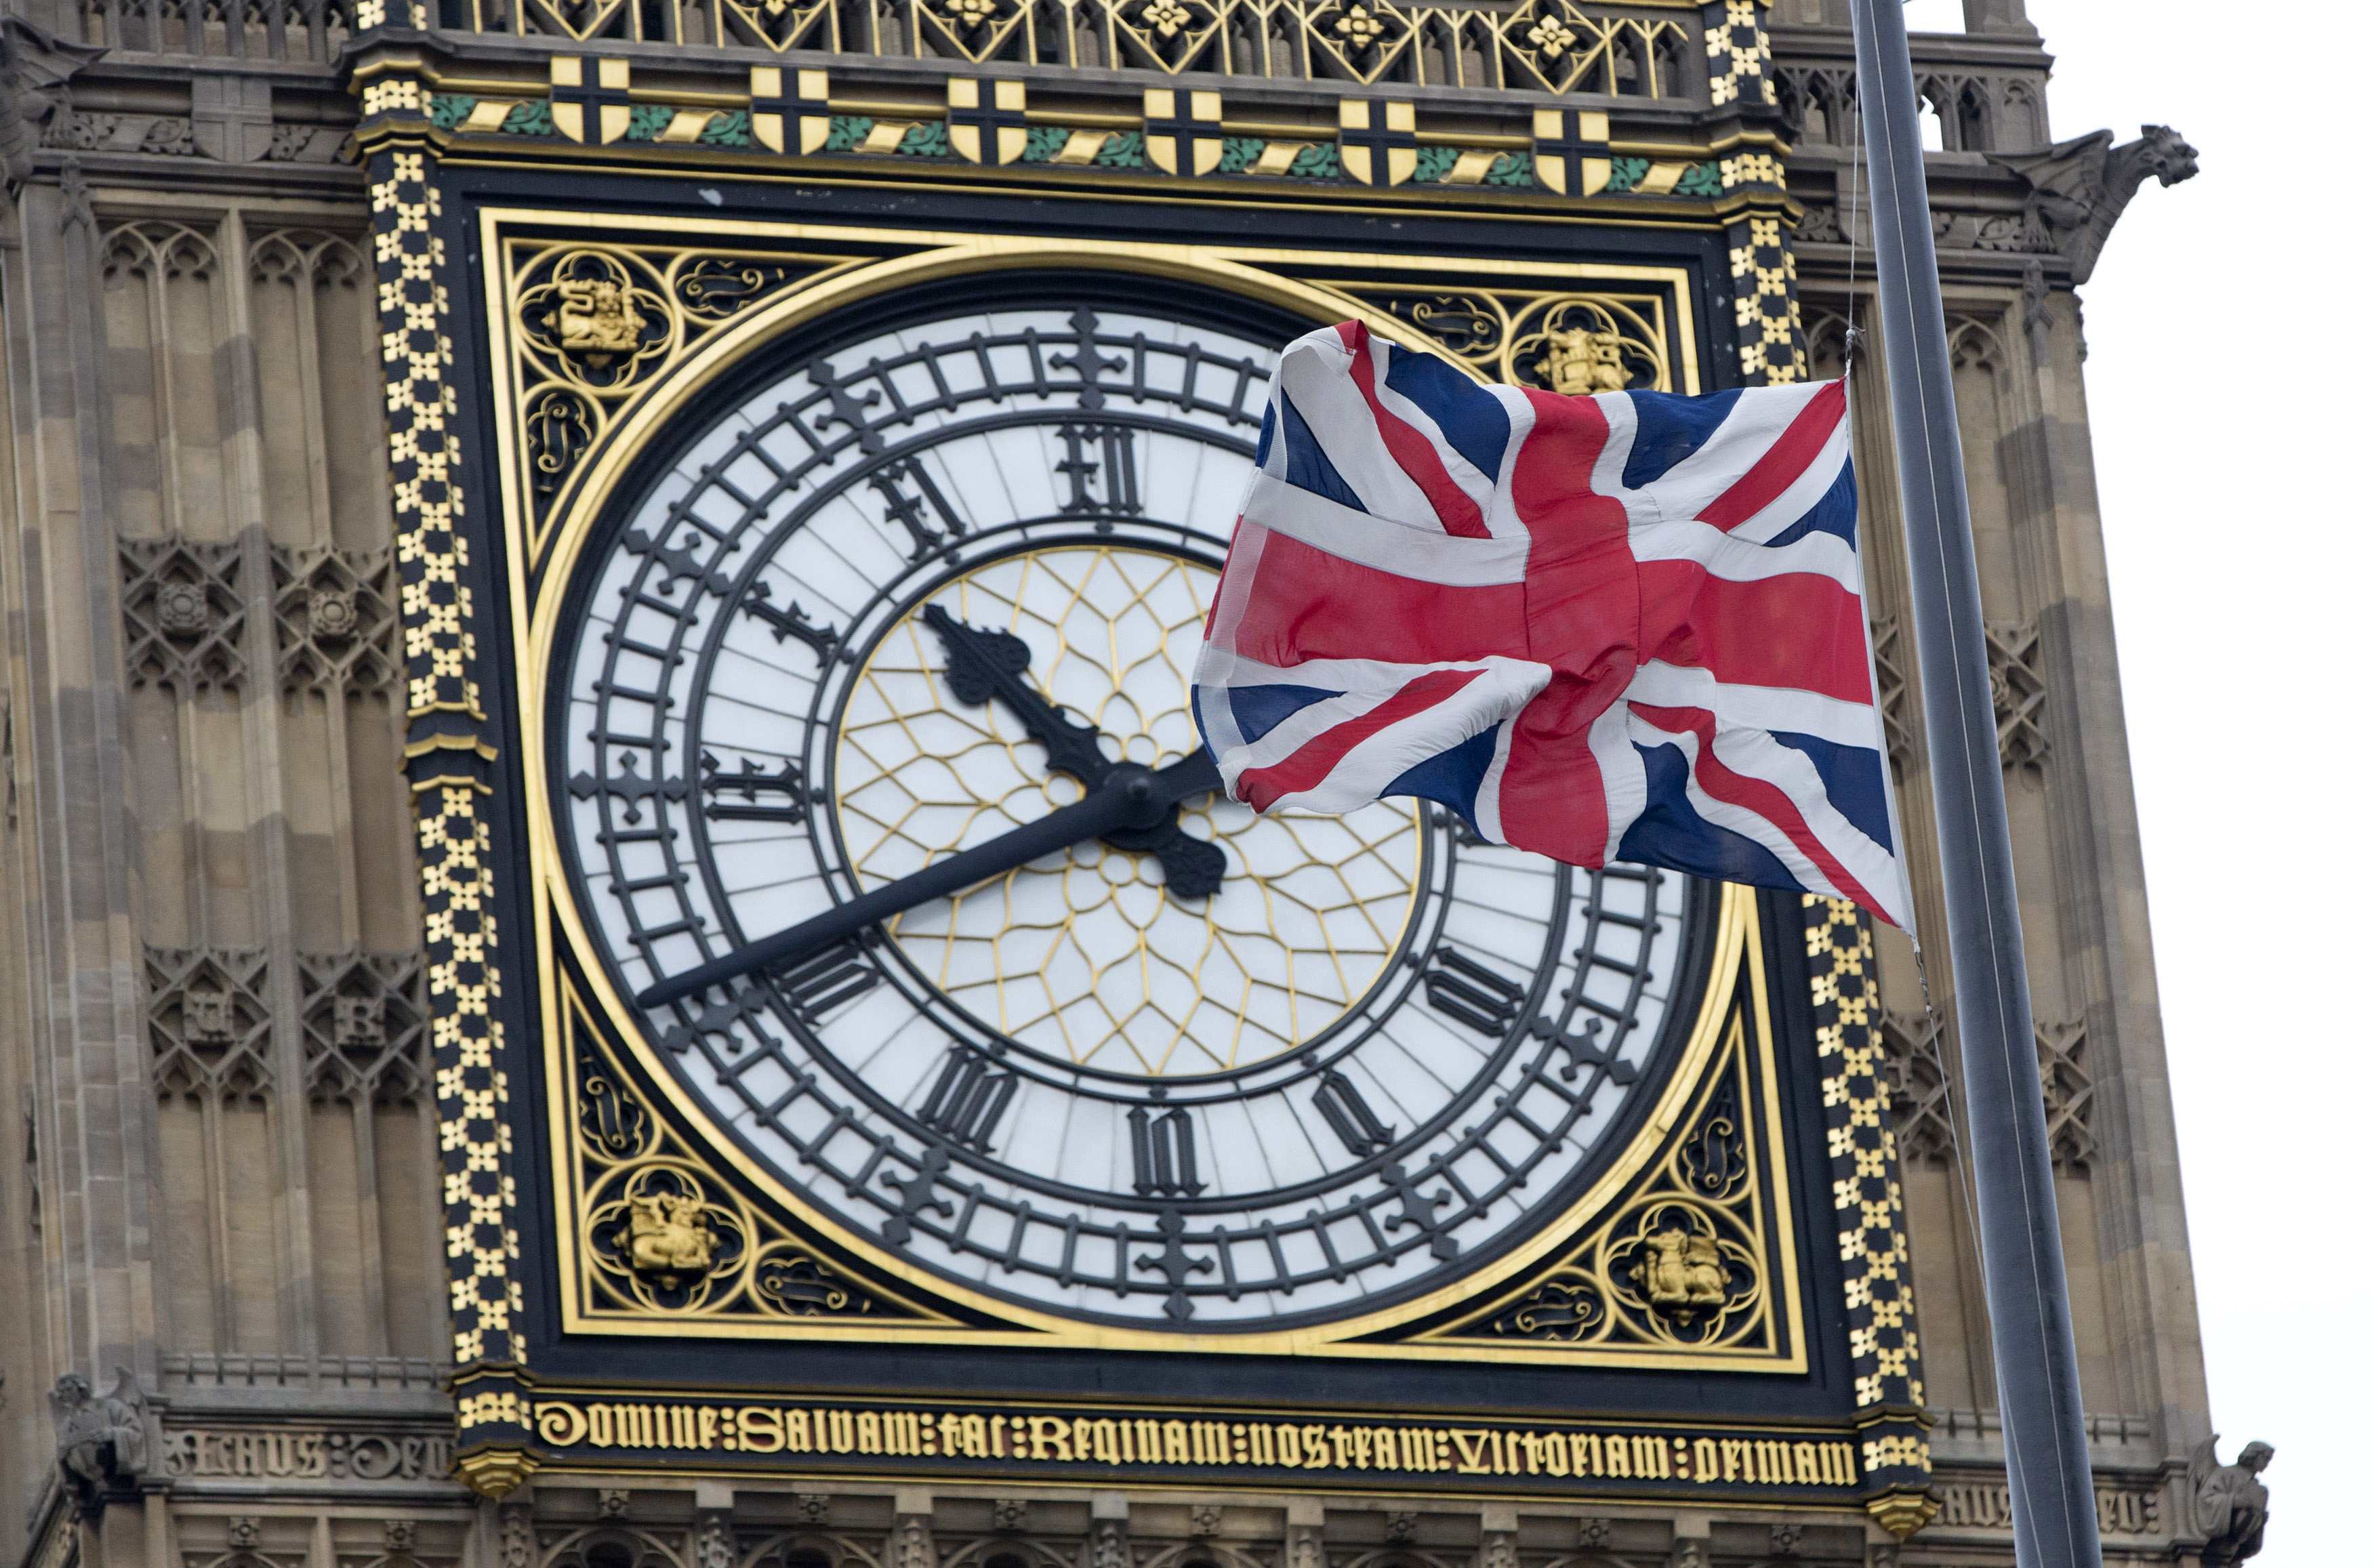 Почему приспущены флаги в великобритании. Флаг над Букингемским дворцом. Приспущенный флаг Великобритании. В Букингемском Дворце приспущены флаги. Букингемский дворец,Биг Бен и флаг Великобритании.